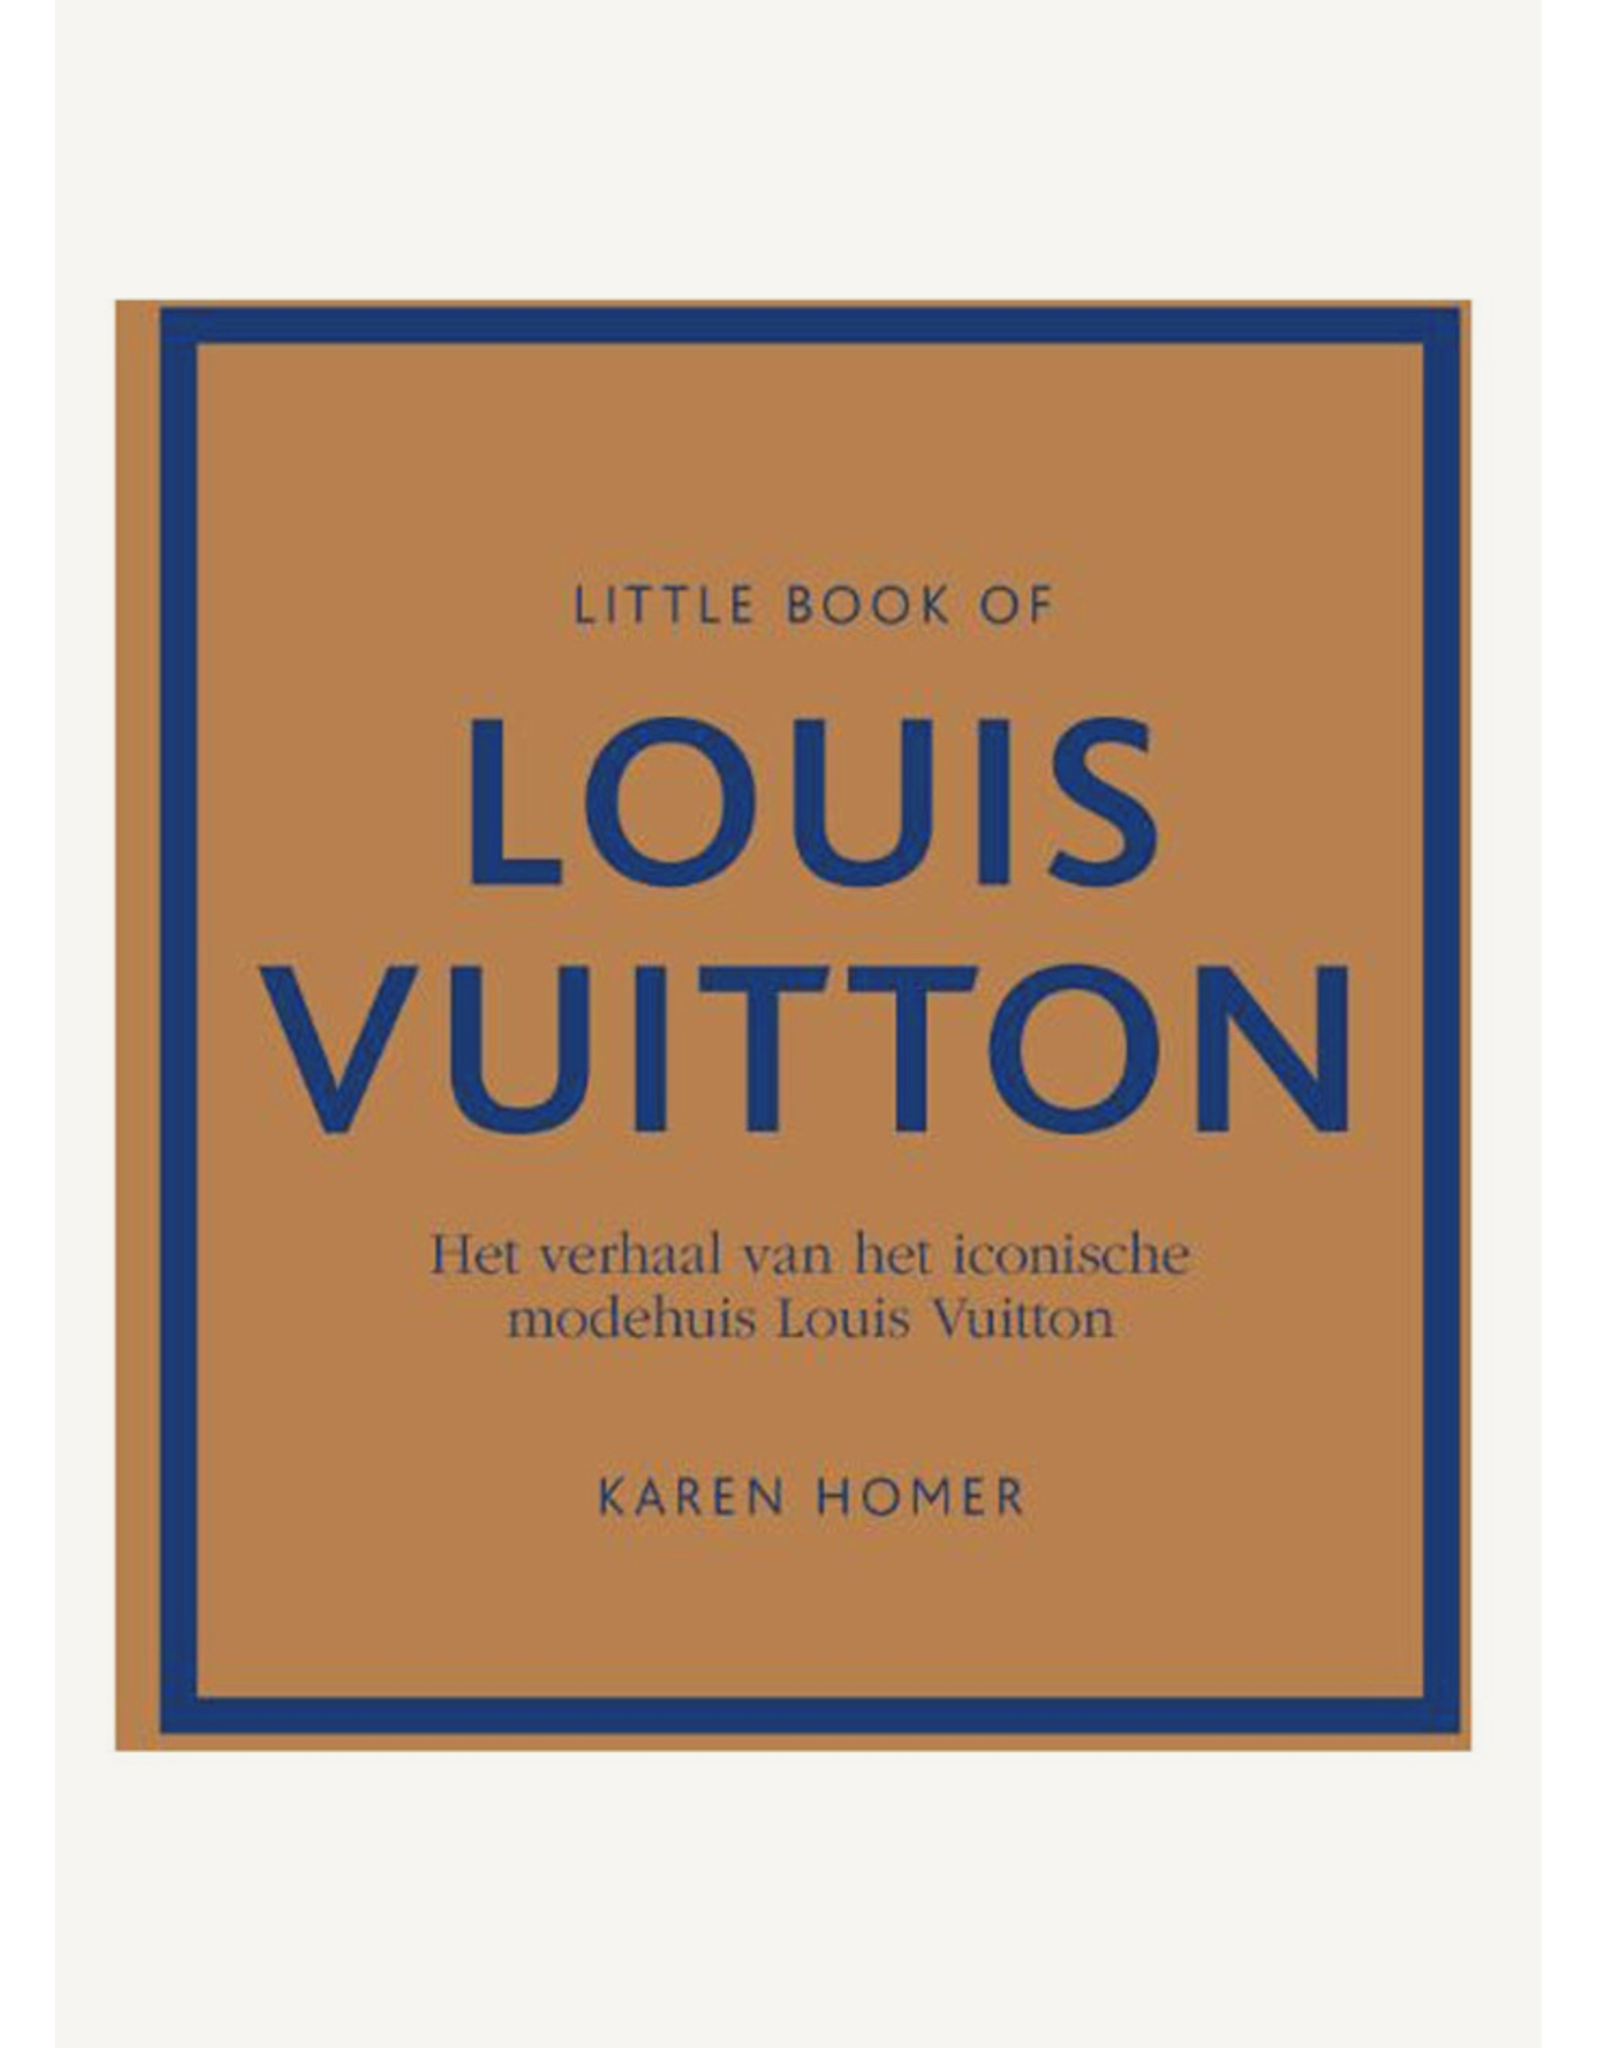 Kitchen Trend Little book of Louis Vuitton 18.99